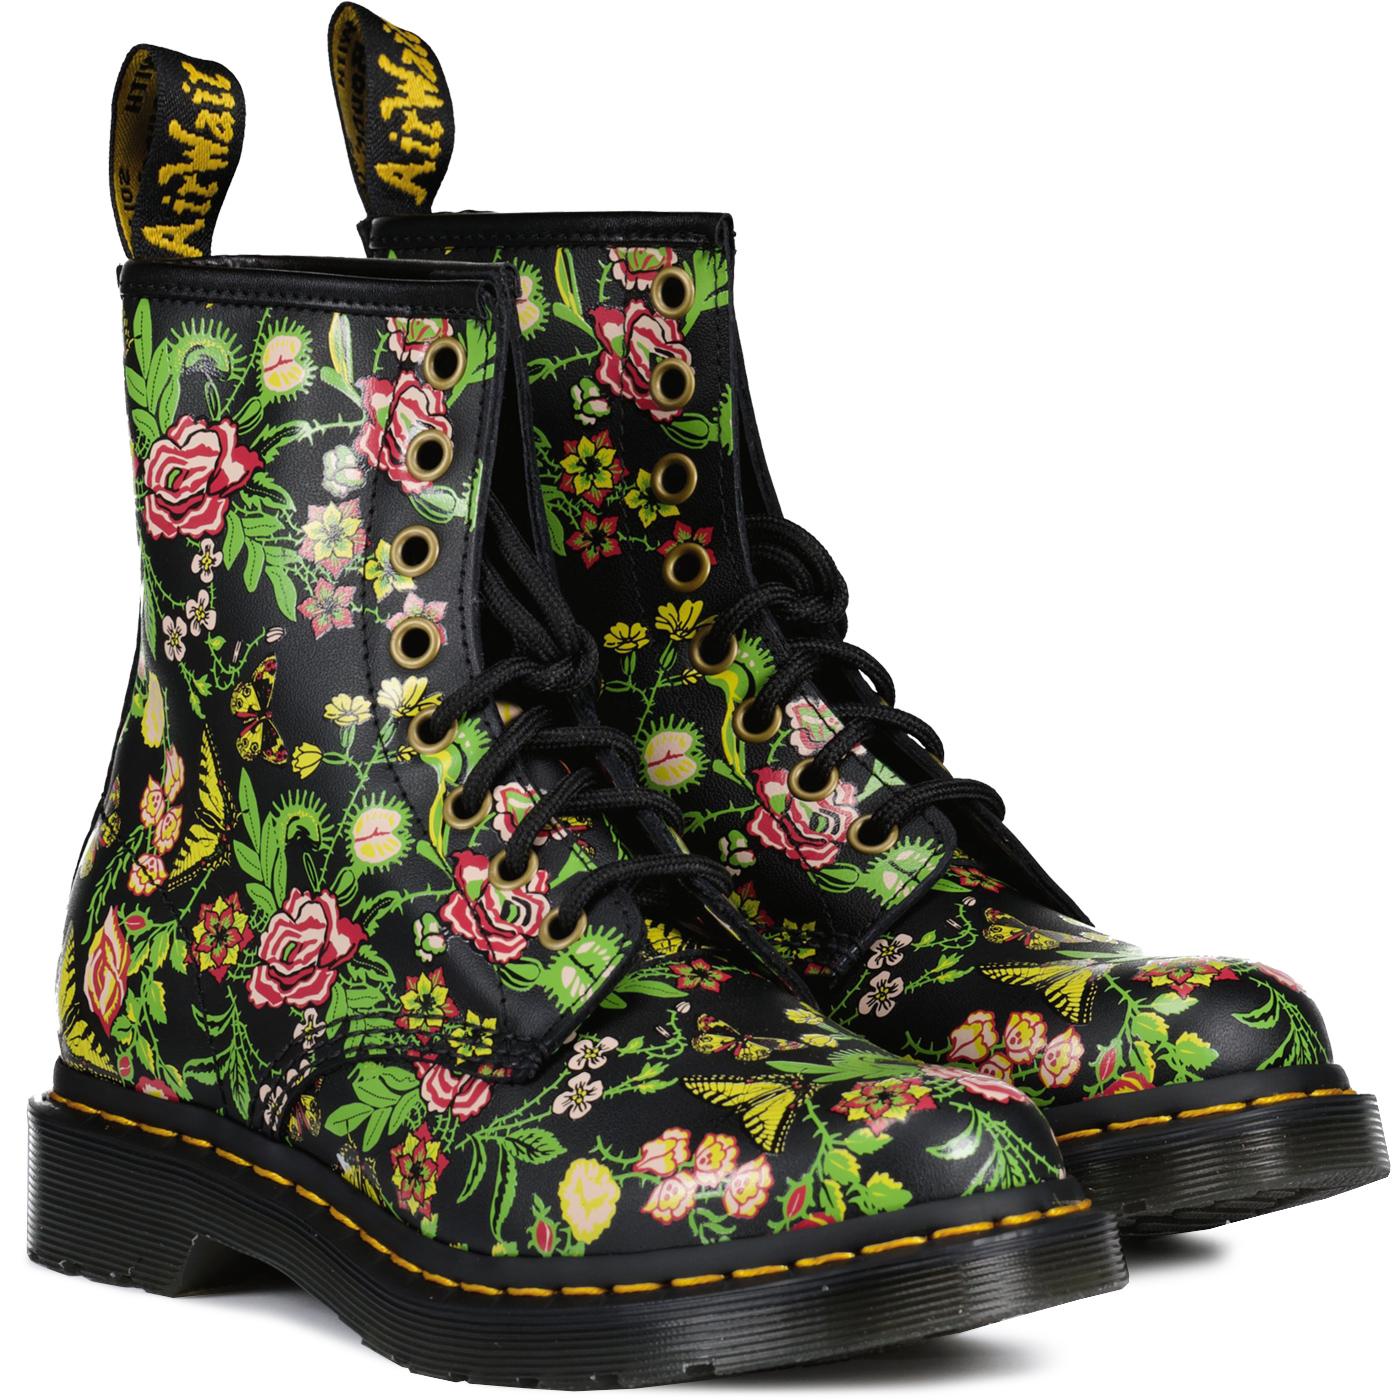 DR MARTENS 1460 Floral Bloom Retro Boots in Black